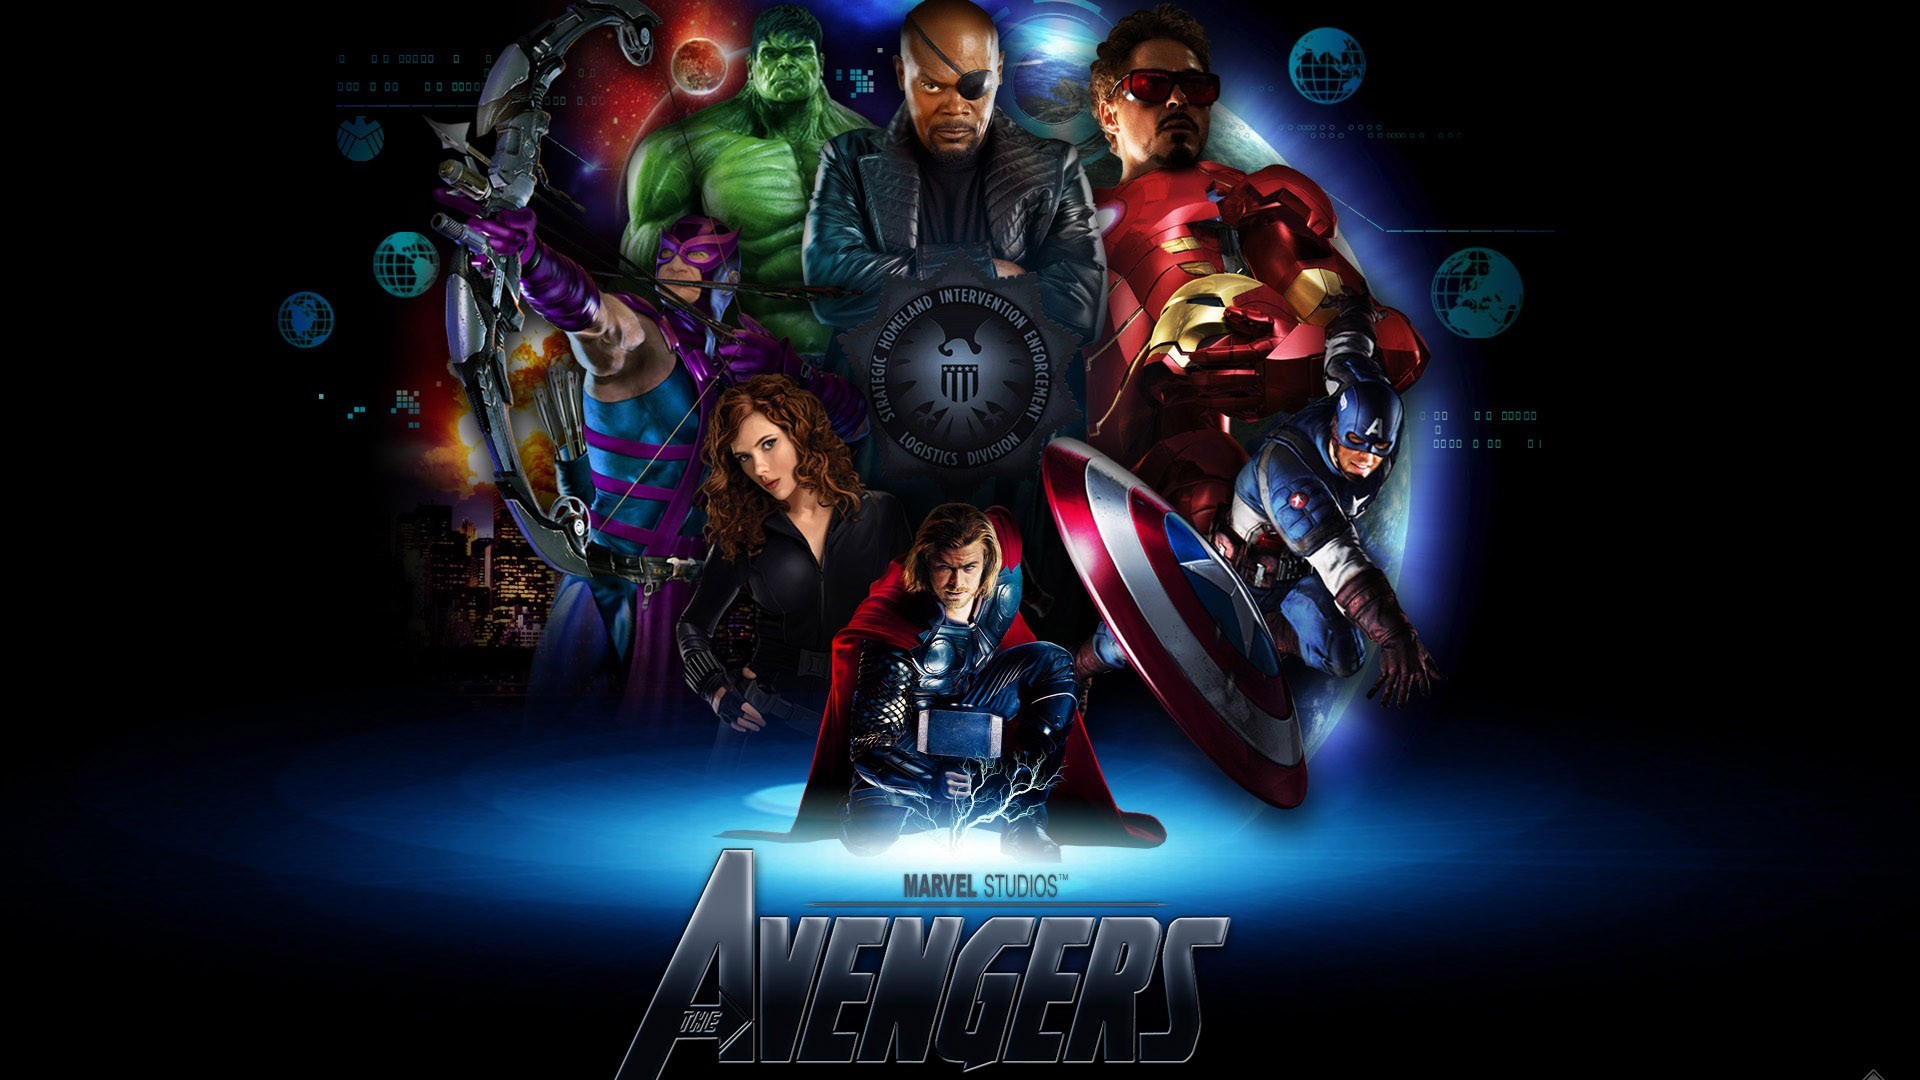 Movies The Avengers Thor Iron Man Hawkeye Nick Fury Captain America Black Widow Hulk Bruce Banner Ch 1920x1080